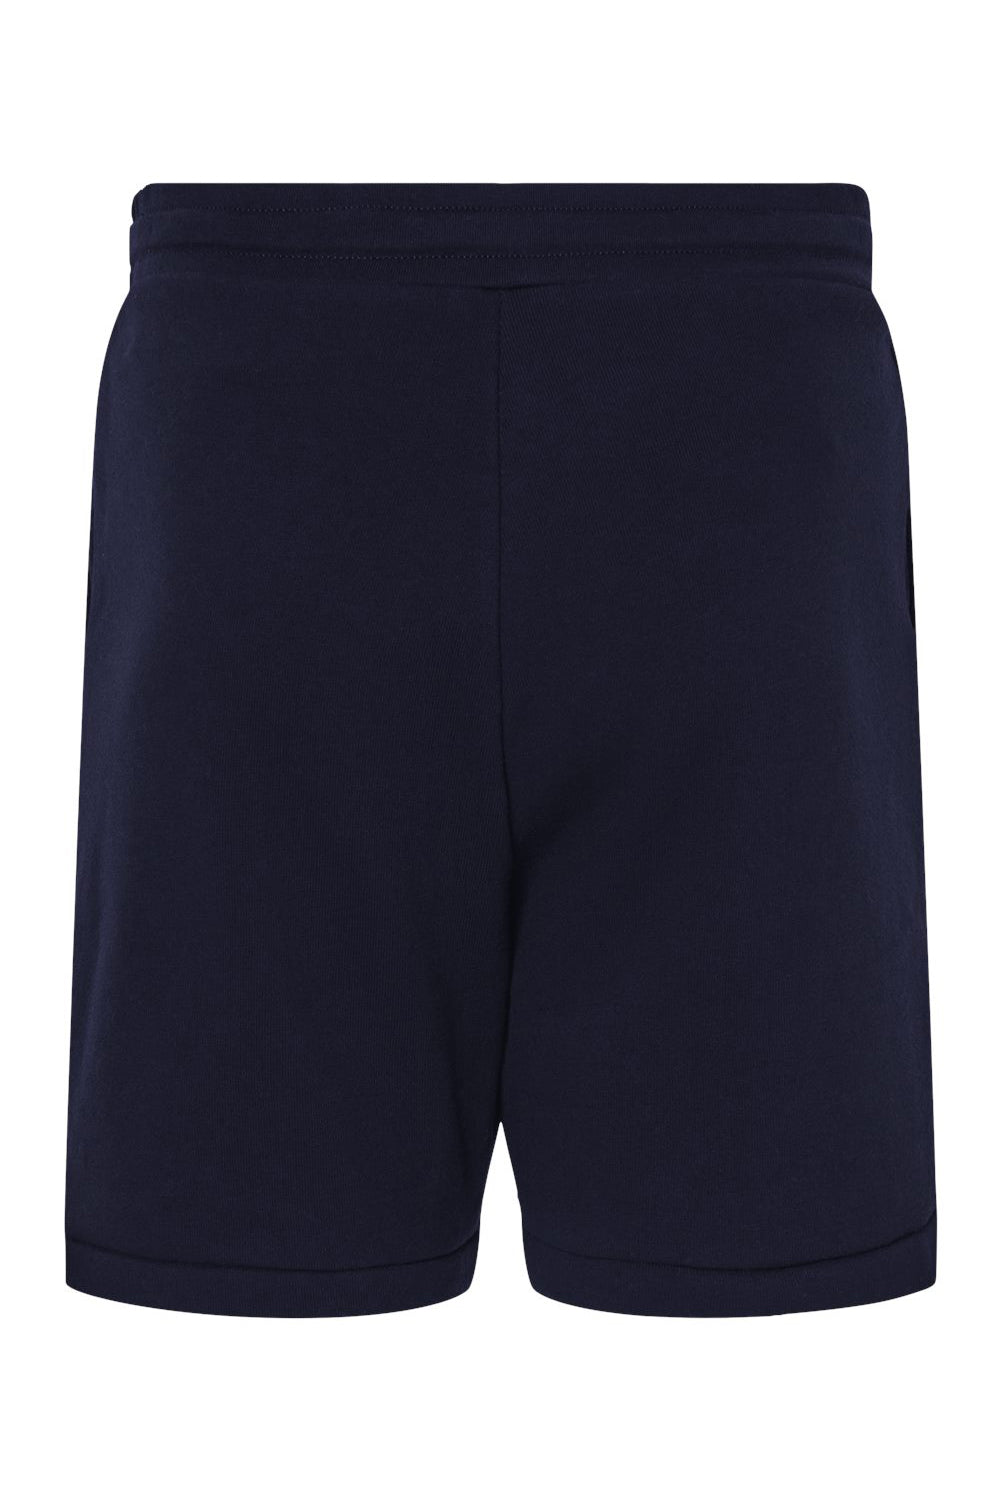 Bella + Canvas 3724 Mens Shorts w/ Pockets Navy Blue Flat Back